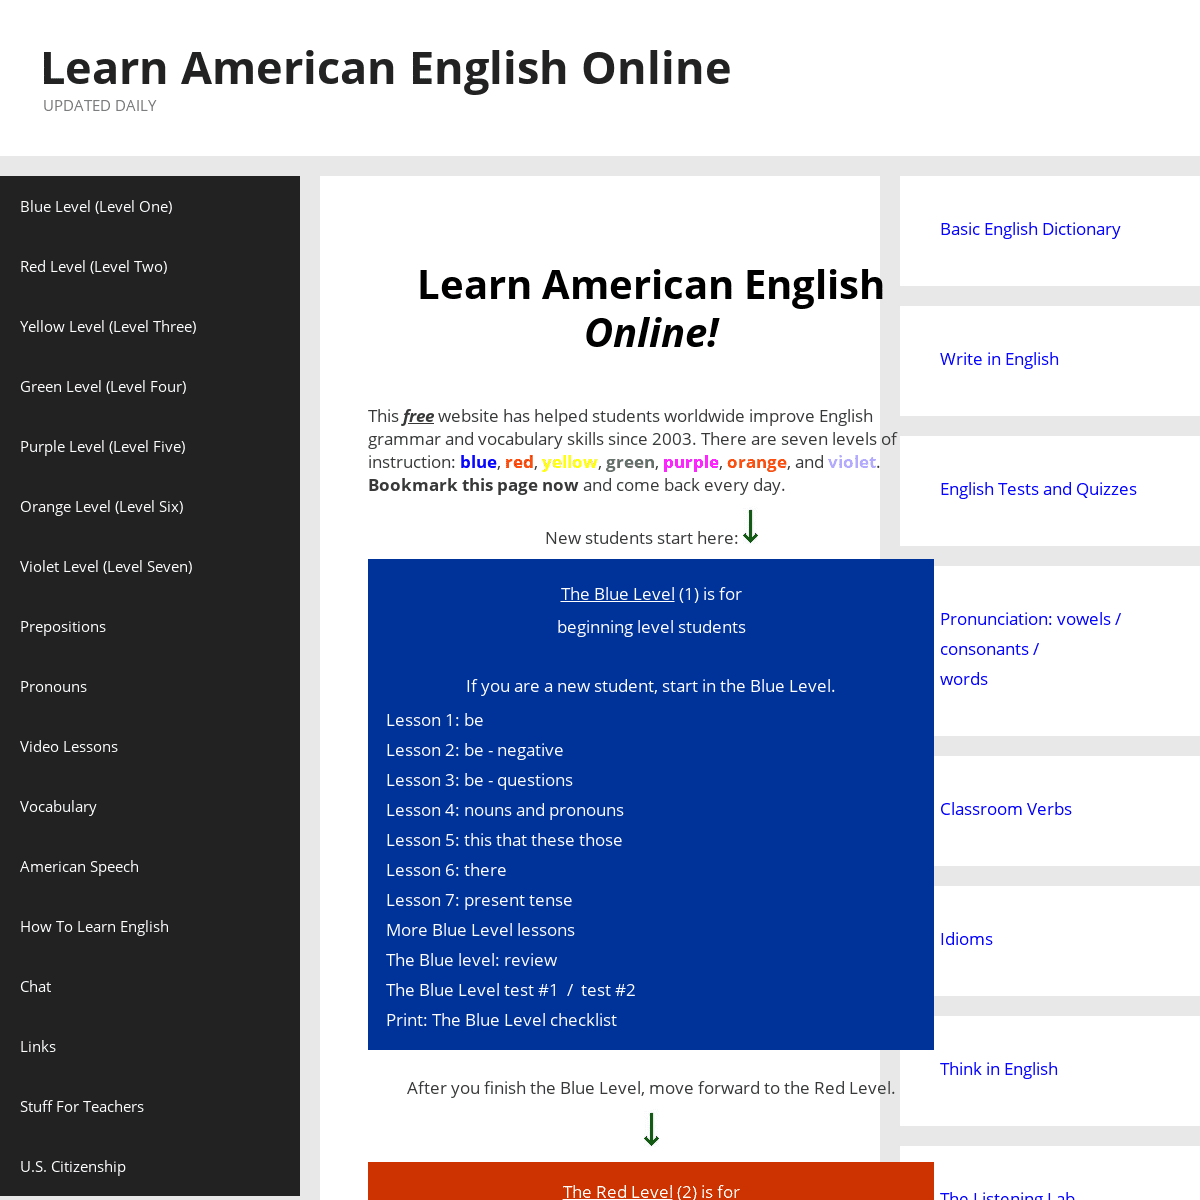 A complete backup of https://learnamericanenglishonline.com